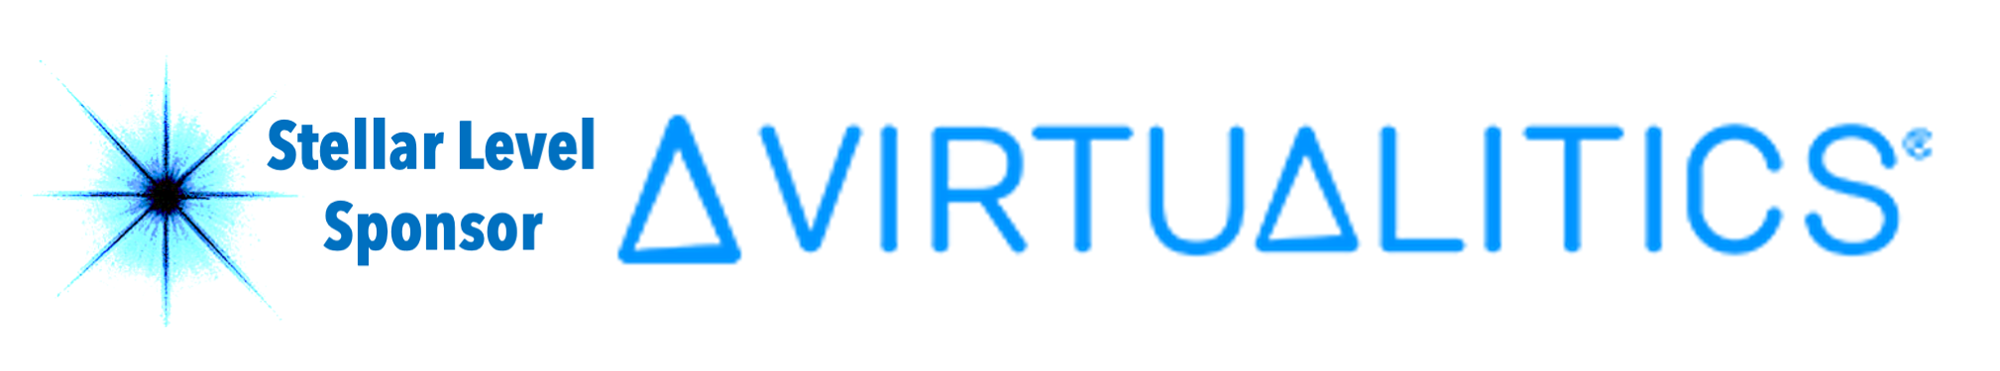 Virtualitics